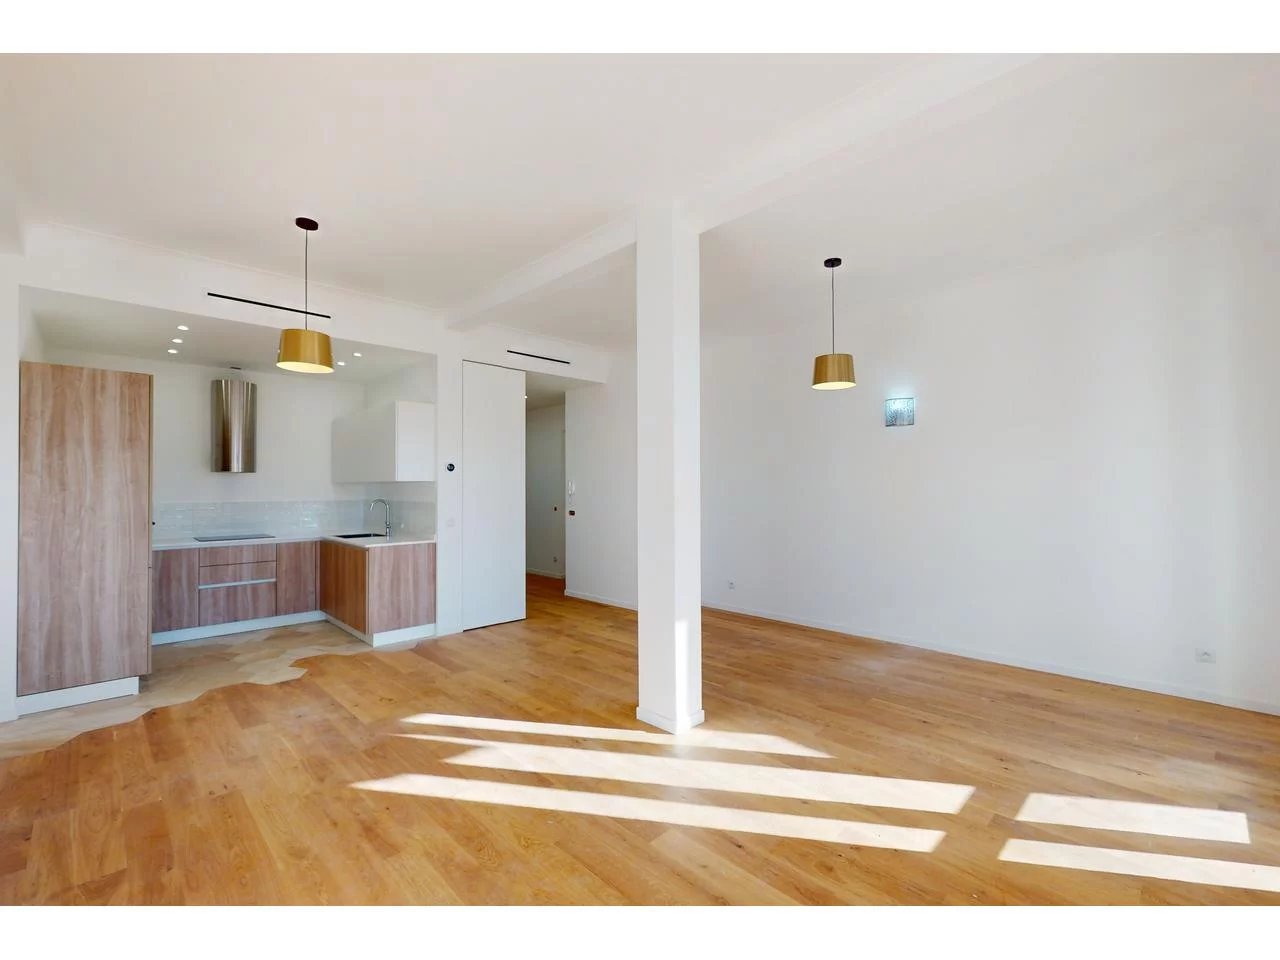 Appartement  3 Locali 78.59m2  In vendita   560 000 €